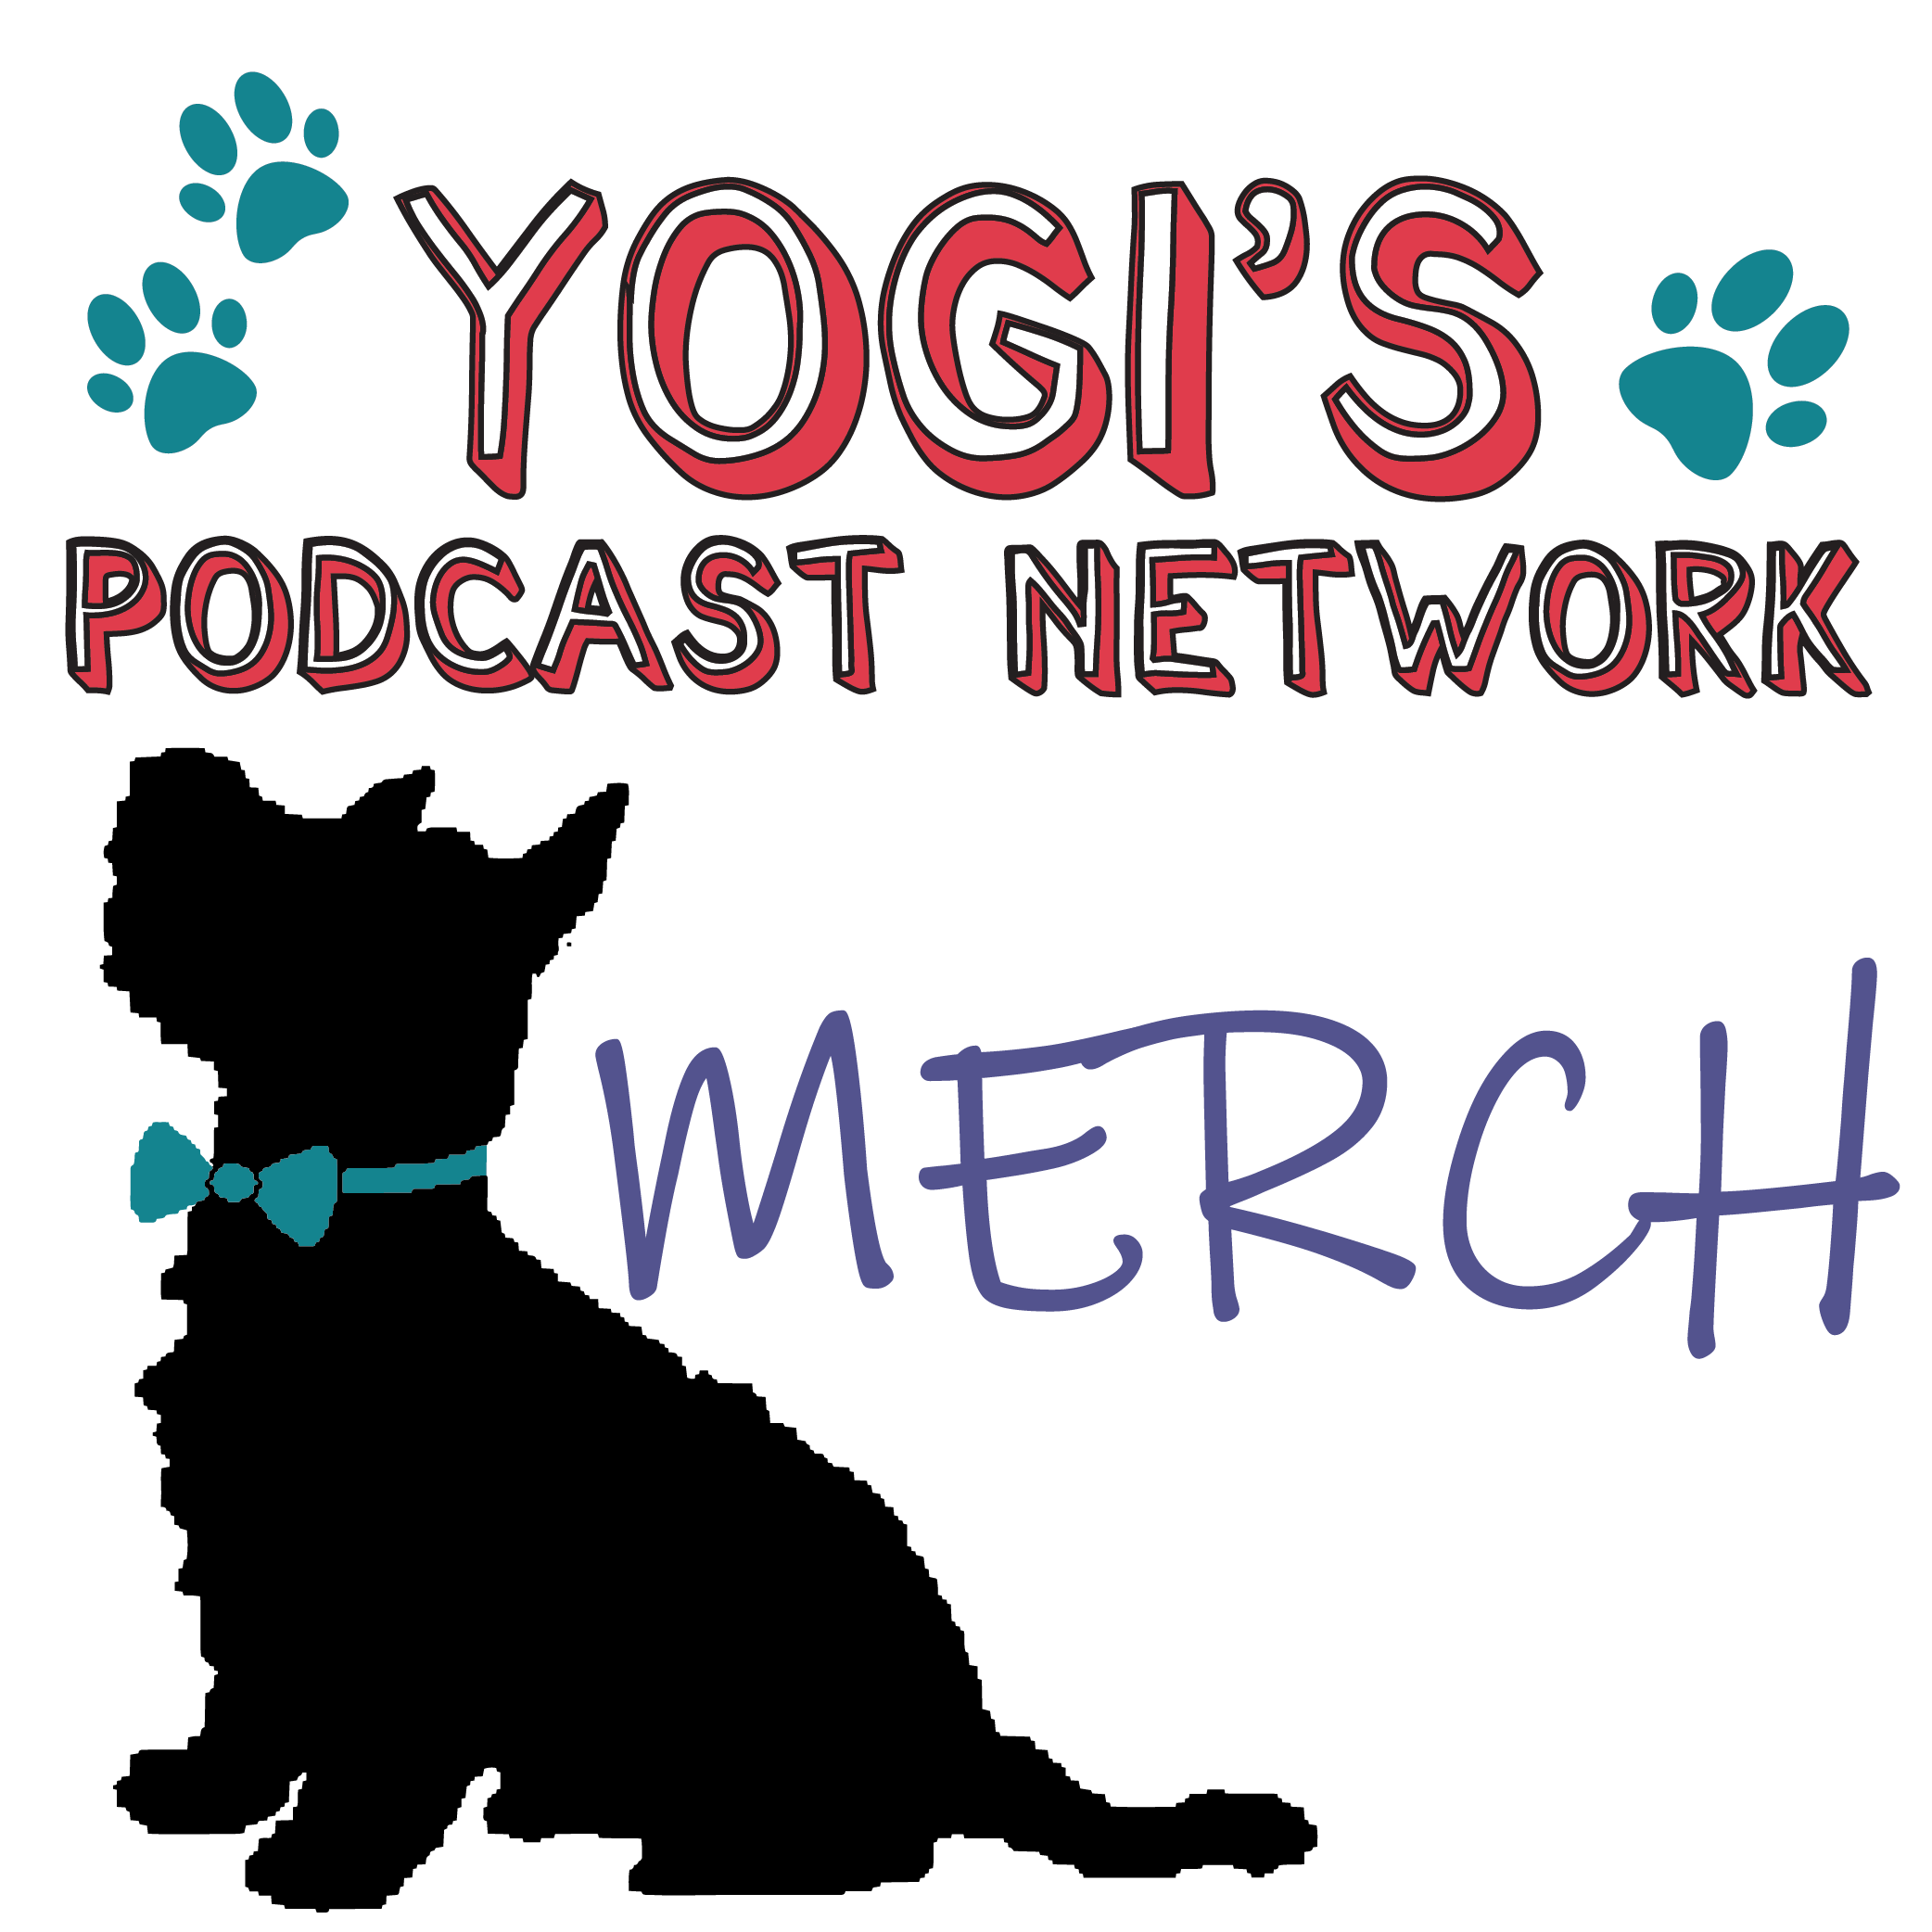 Yogi's Podcast Network Merch